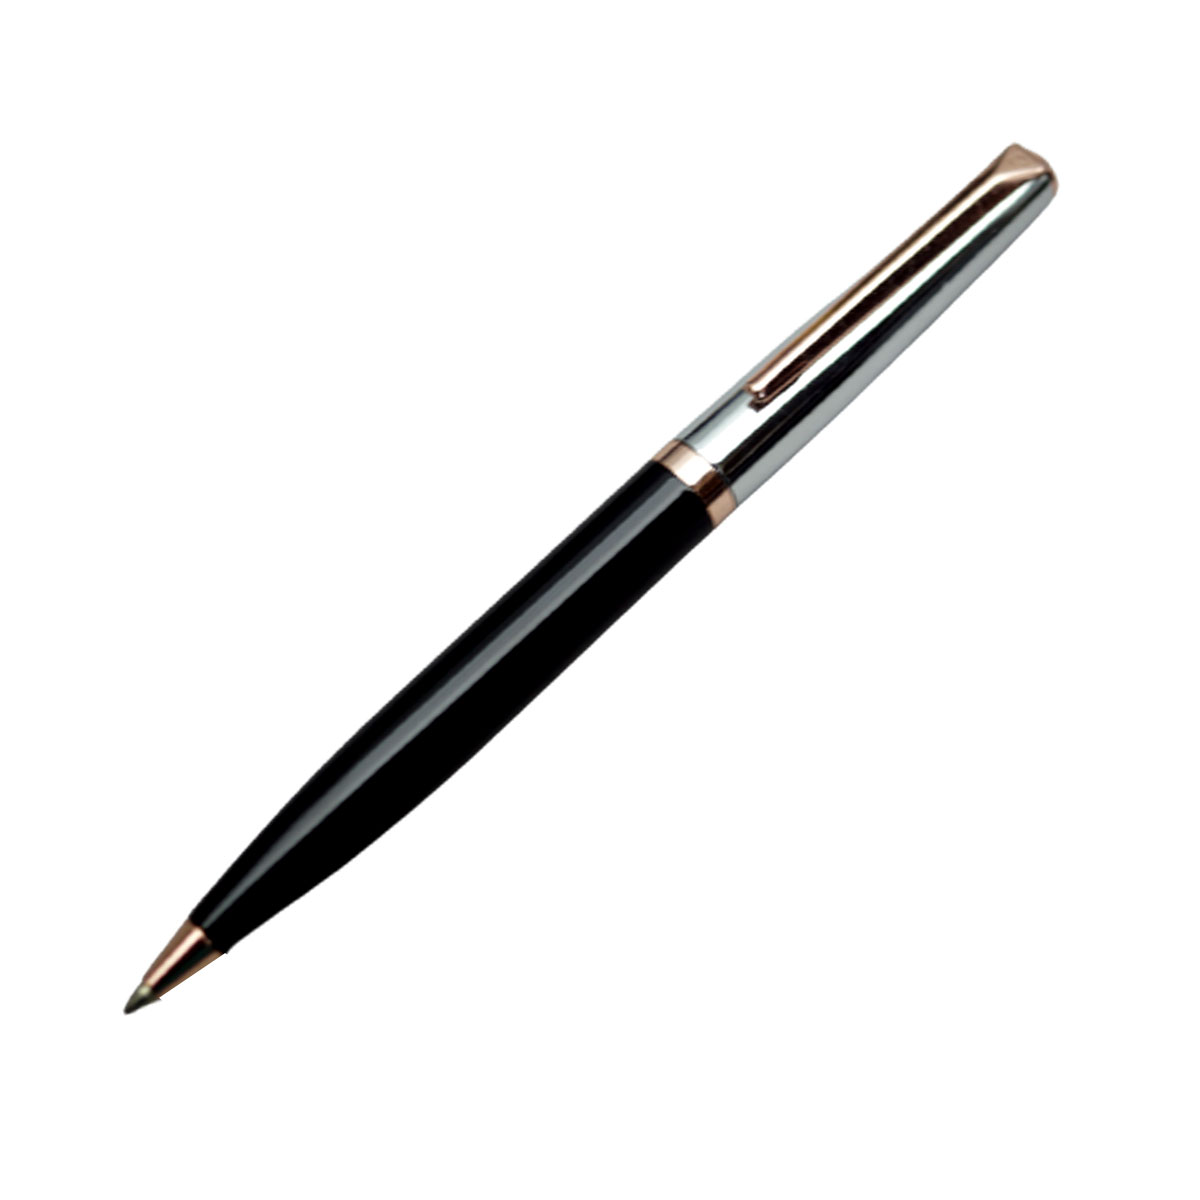 Pierre Cardin Crest White Gold Black Color Body With Silver Cap Copper Clip Fine Tip Twist Type Ball Pen SKU 20193